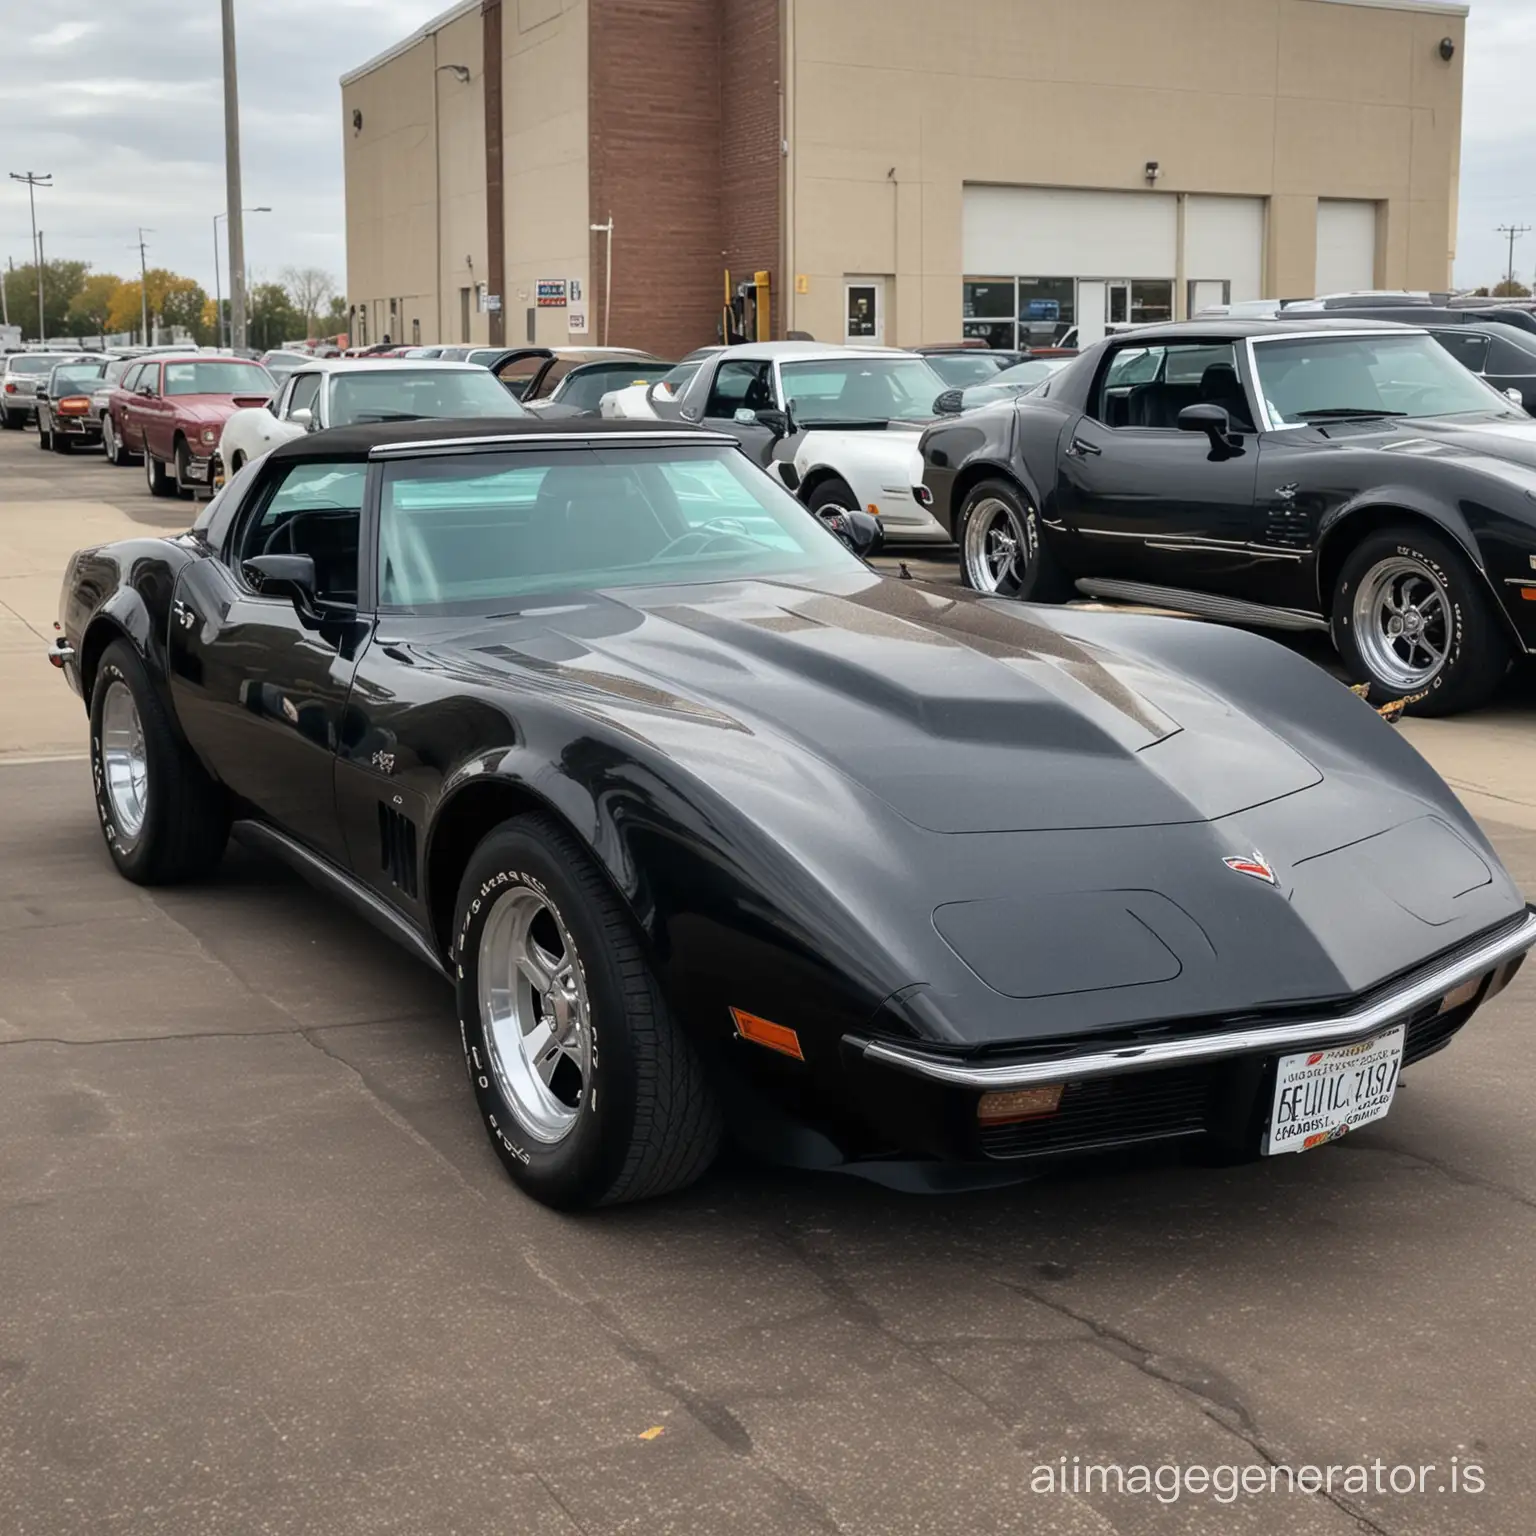 Vintage-Black-Corvette-Stingray-Parked-in-a-Lot